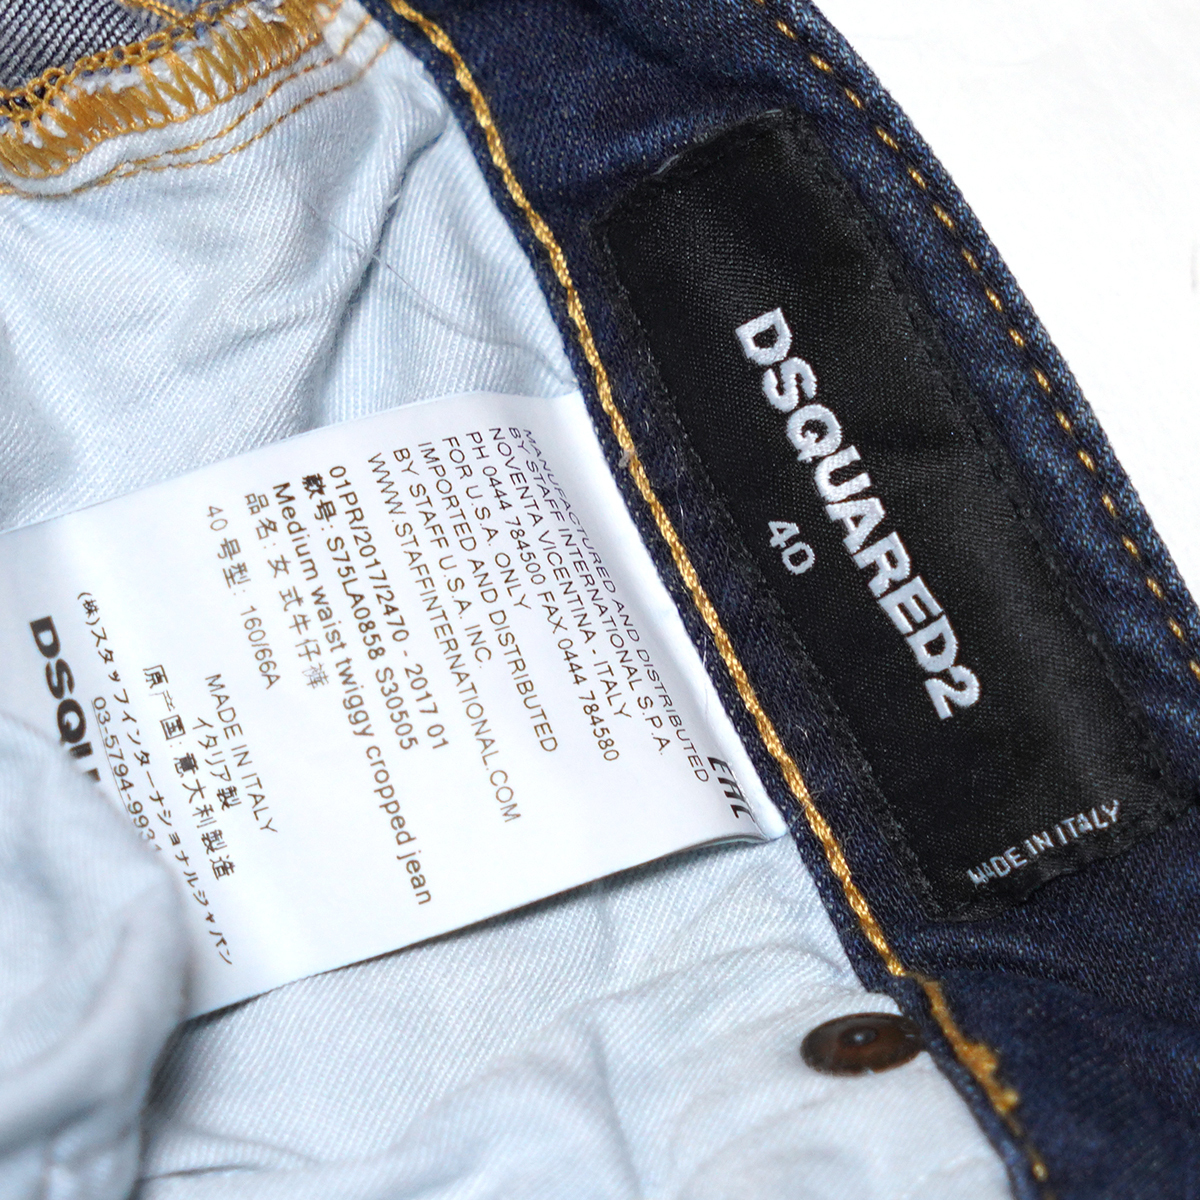  Dsquared укороченные брюки Denim джинсы 40 женский S75LA0858TWIGGY CROPPED JEAN